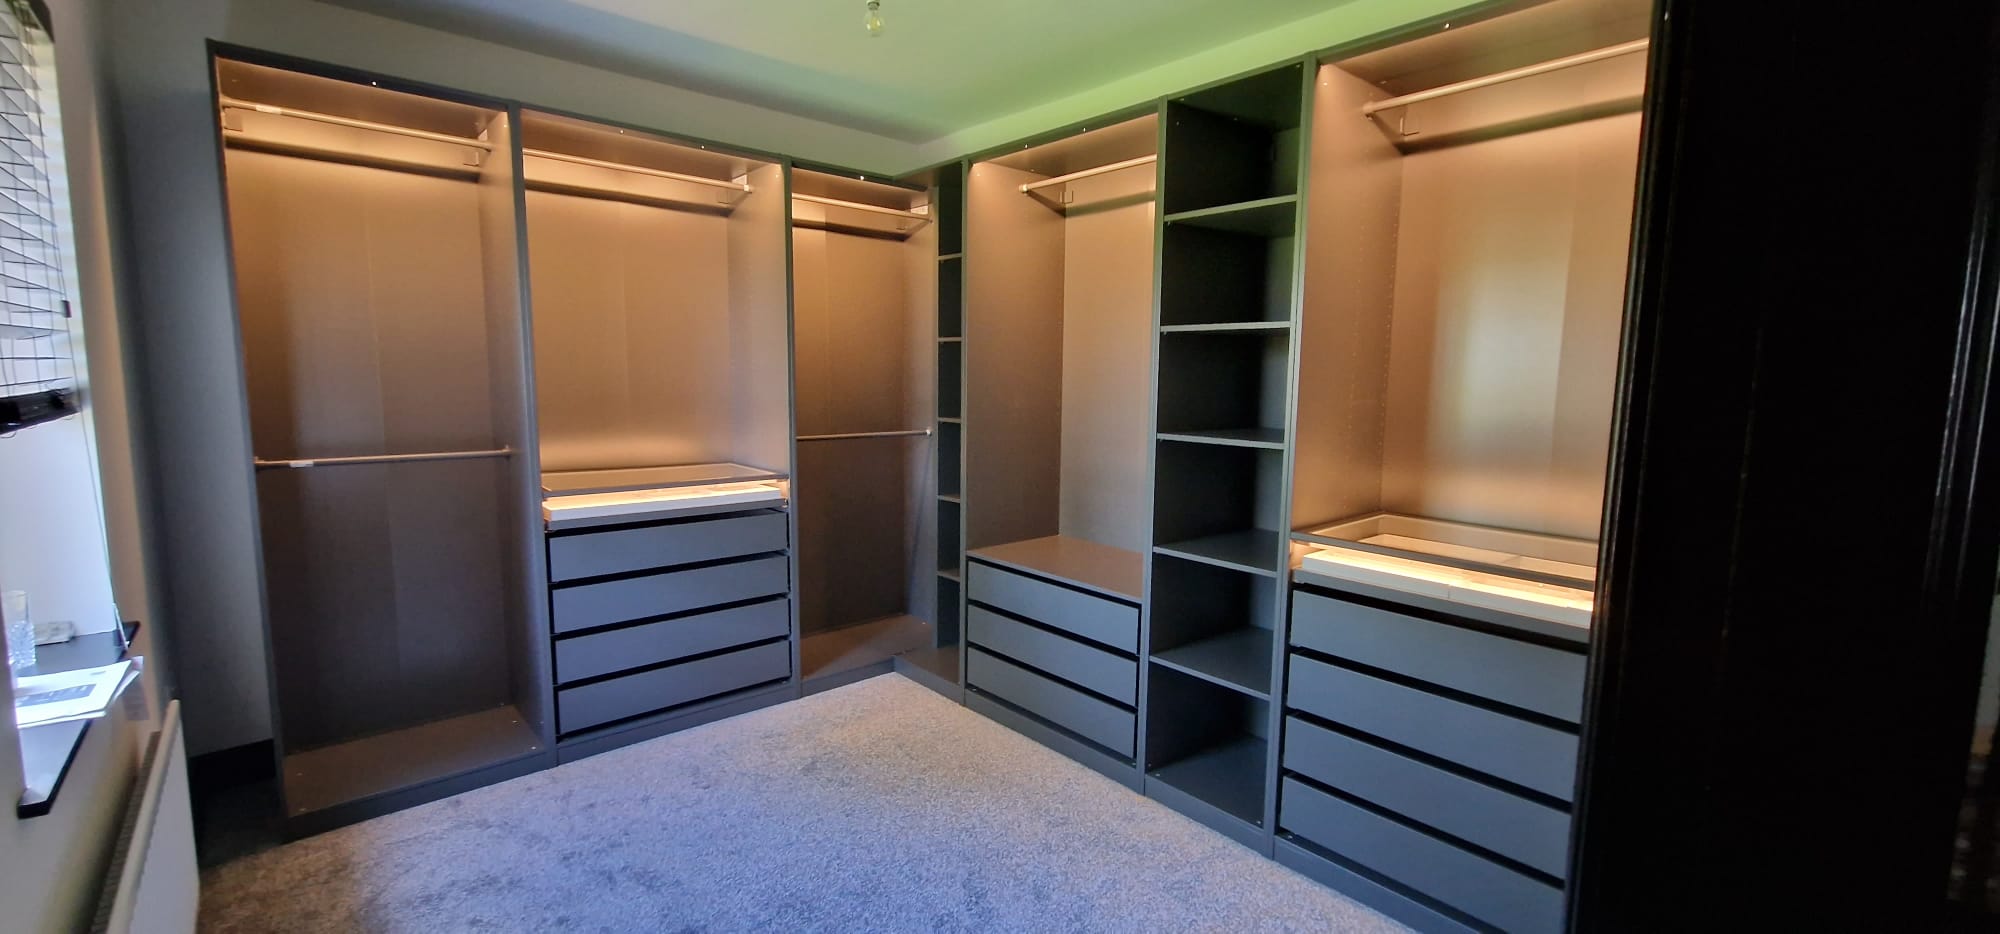 corner wardrobe with built in storage solutions